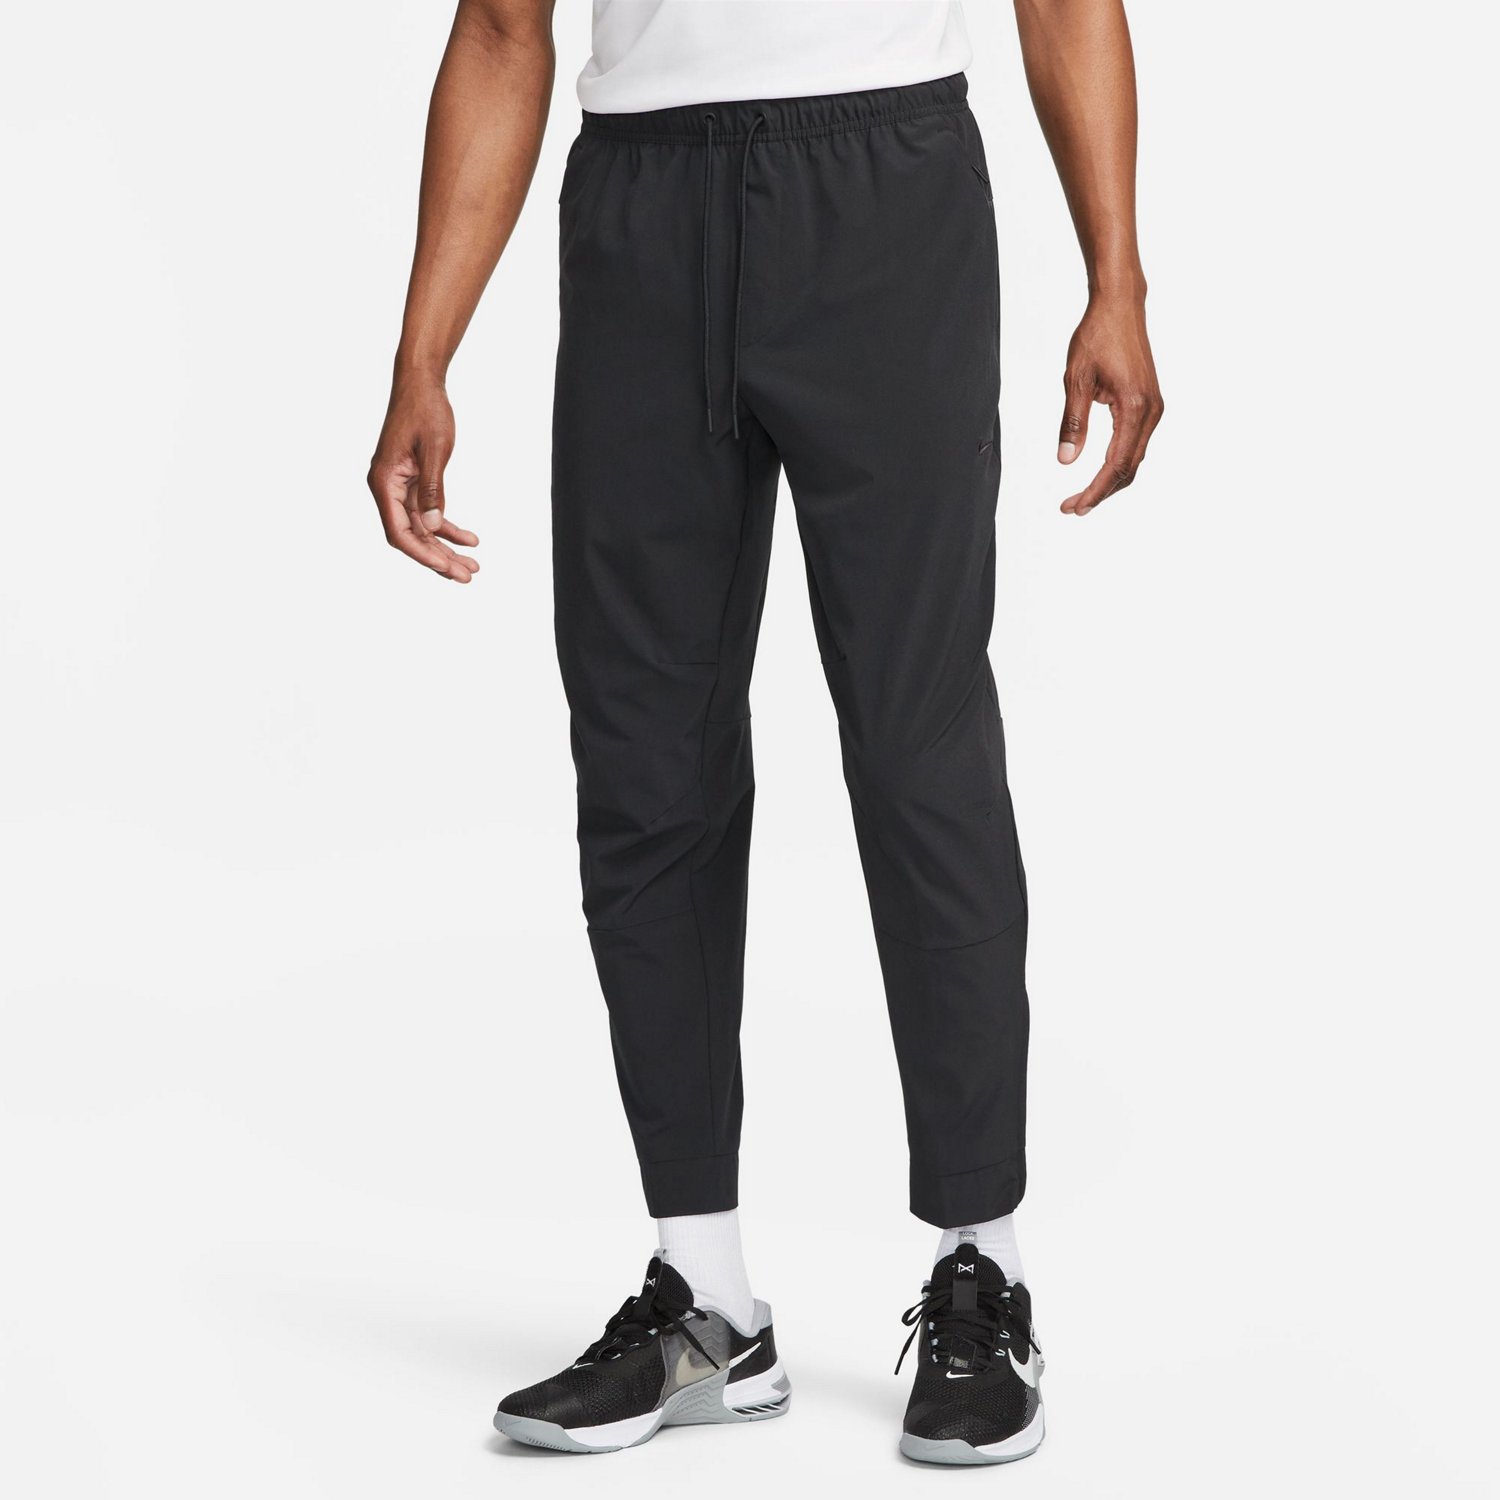 Nike Men's Dri-FIT Unlimited Tapered Training Pants